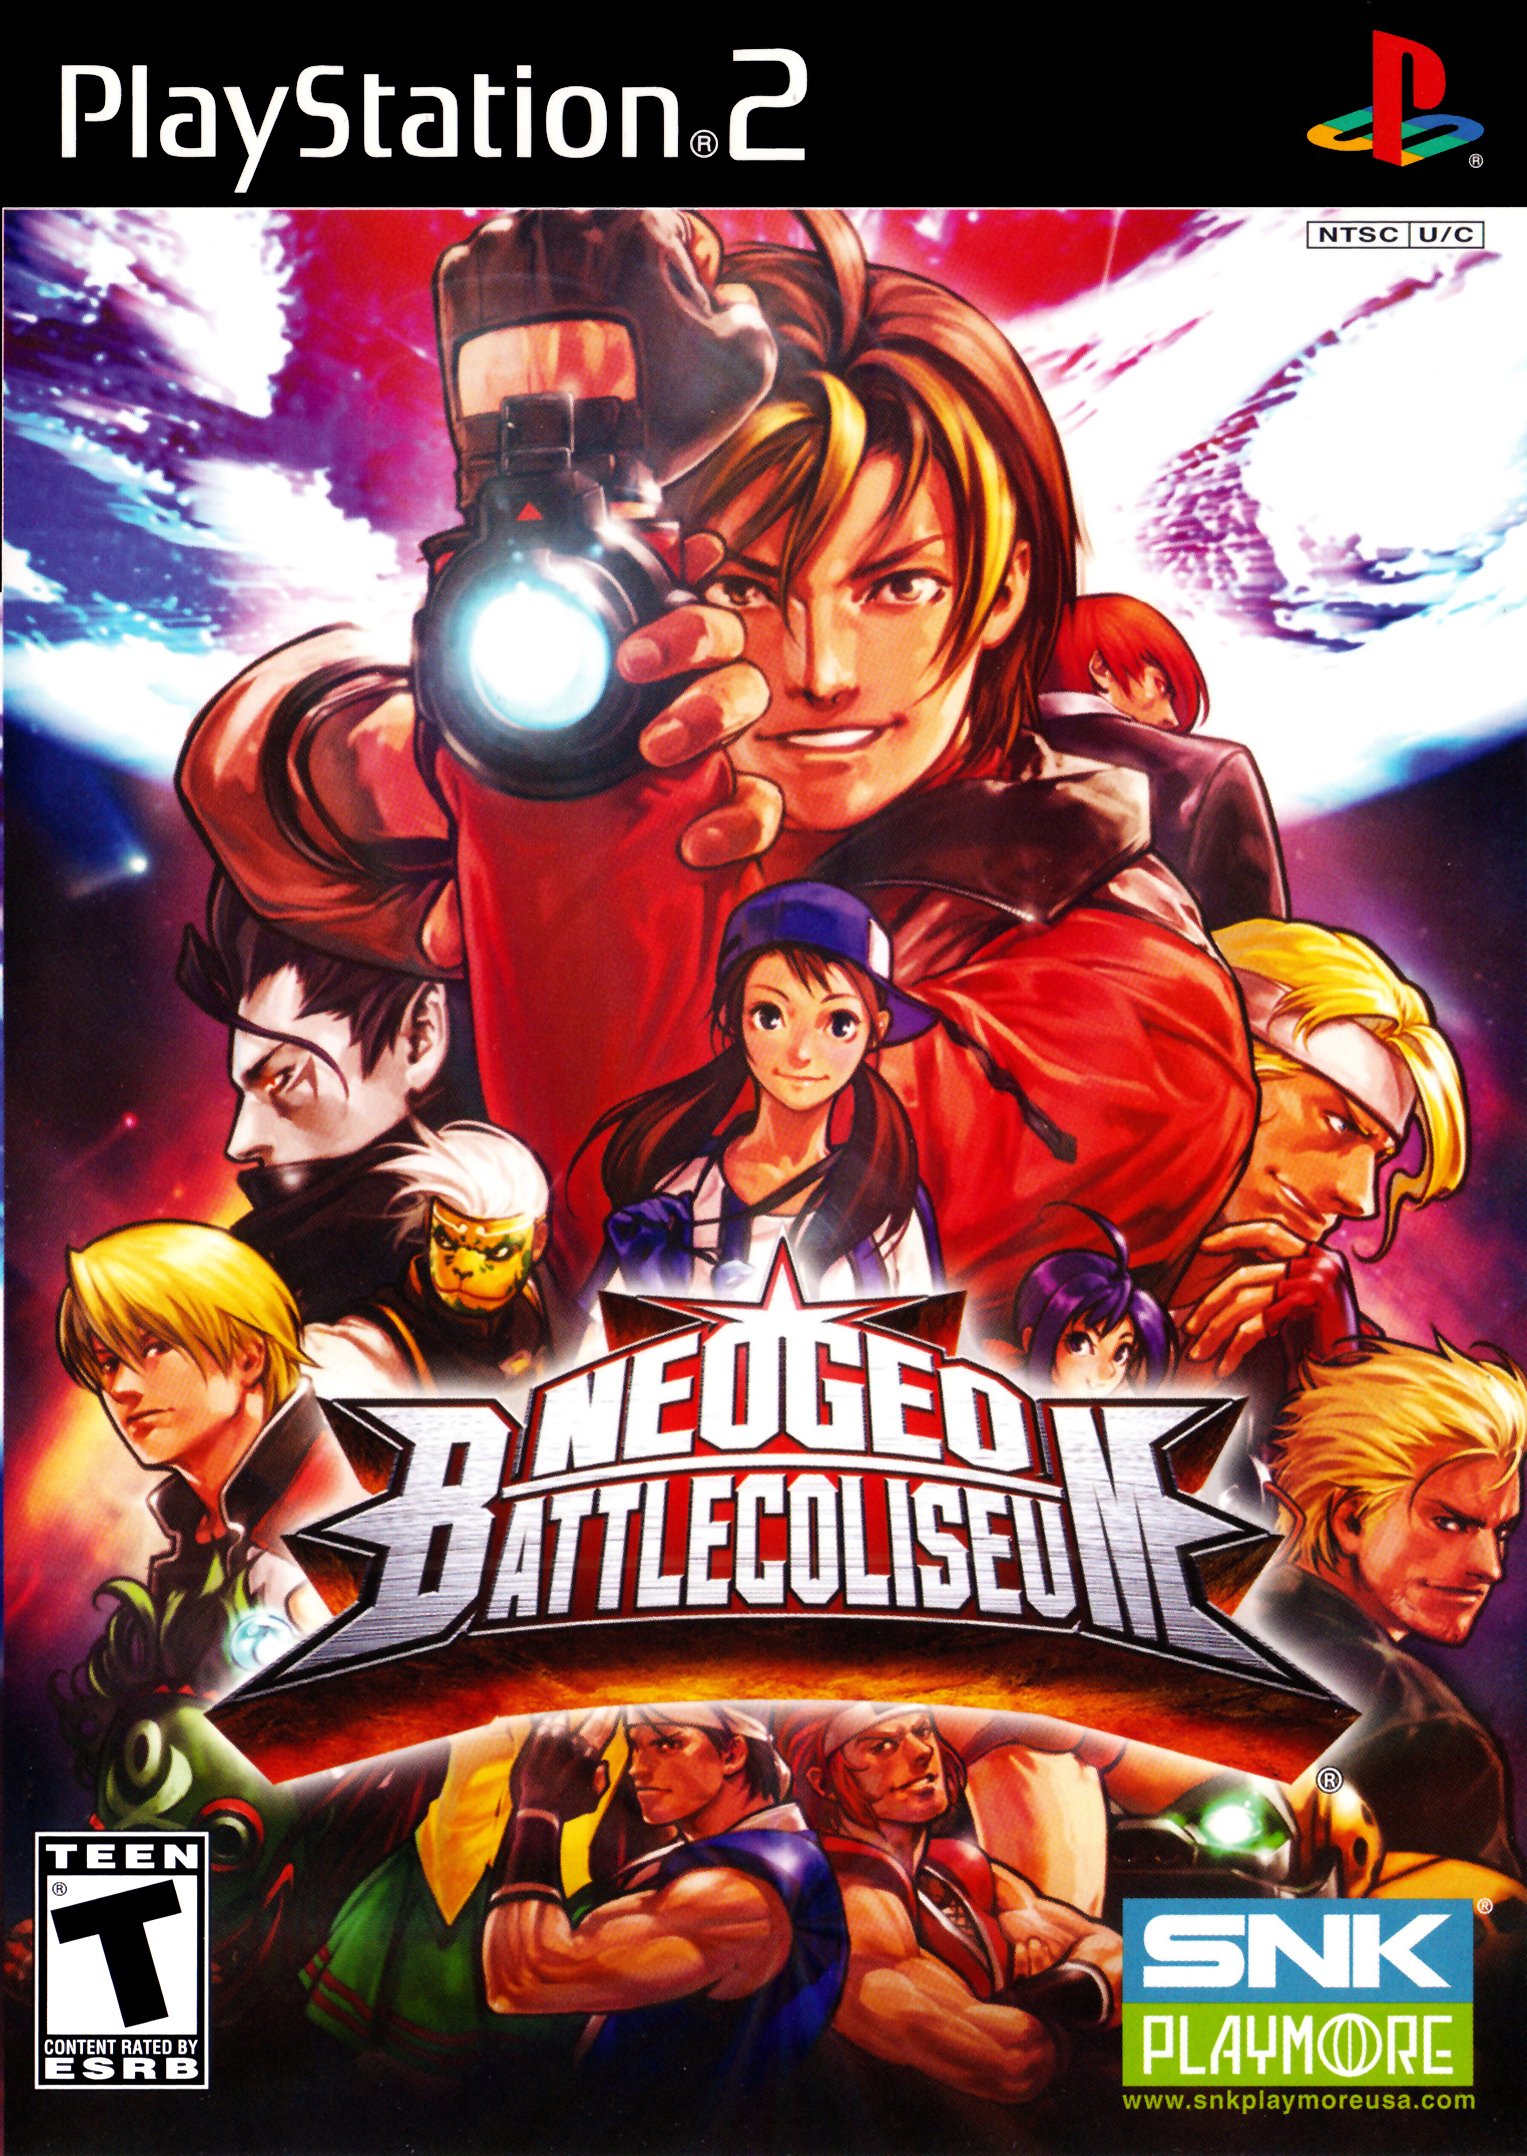 Image of NeoGeo Battle Coliseum